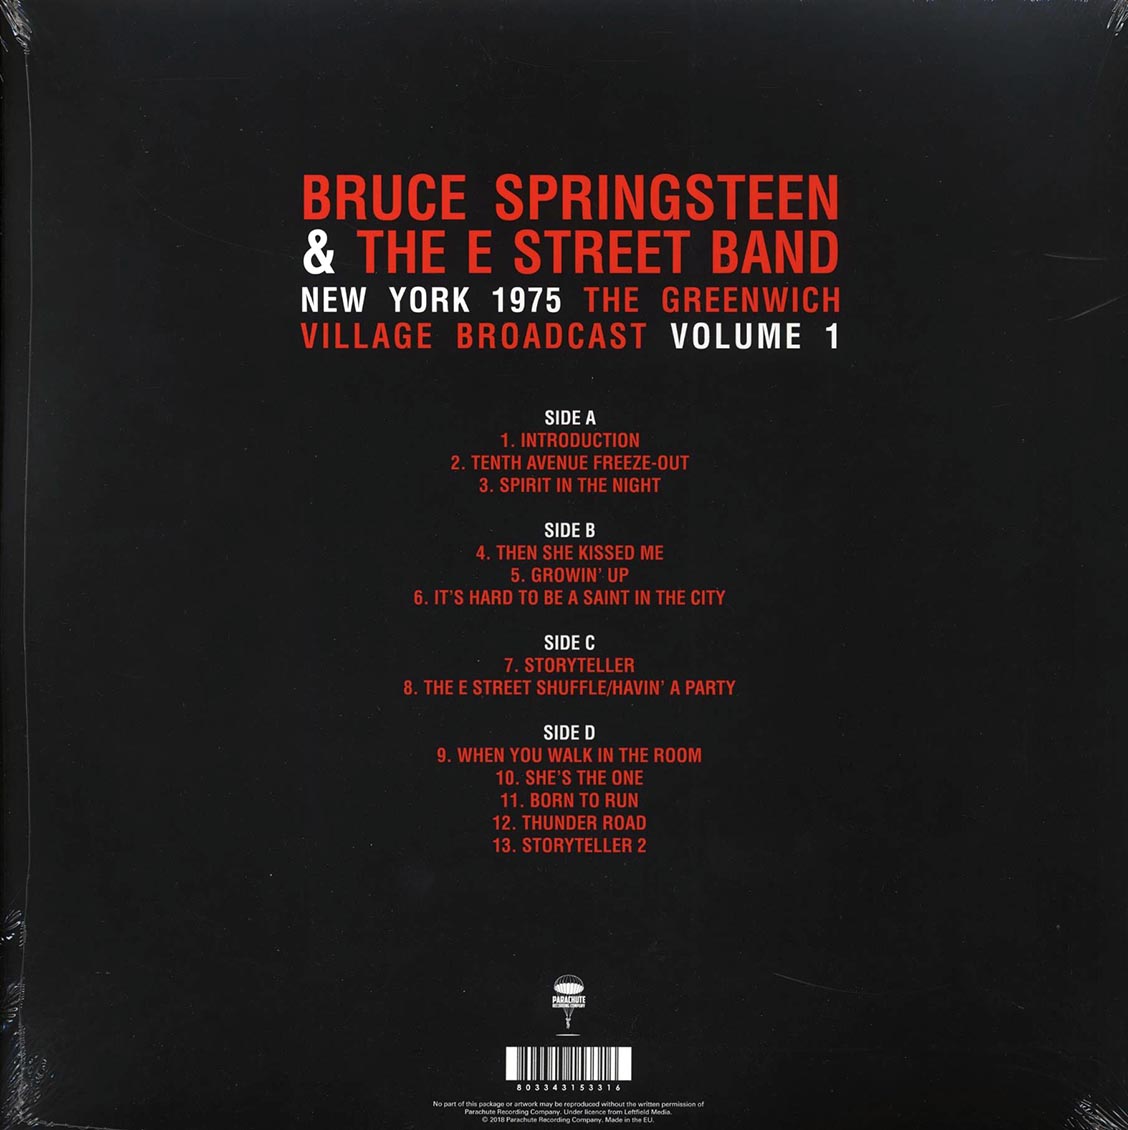 Bruce Springsteen & The E Street Band - New York 1975 Volume 1: The Greenwich Village Broadcast (2xLP) - Vinyl LP, LP